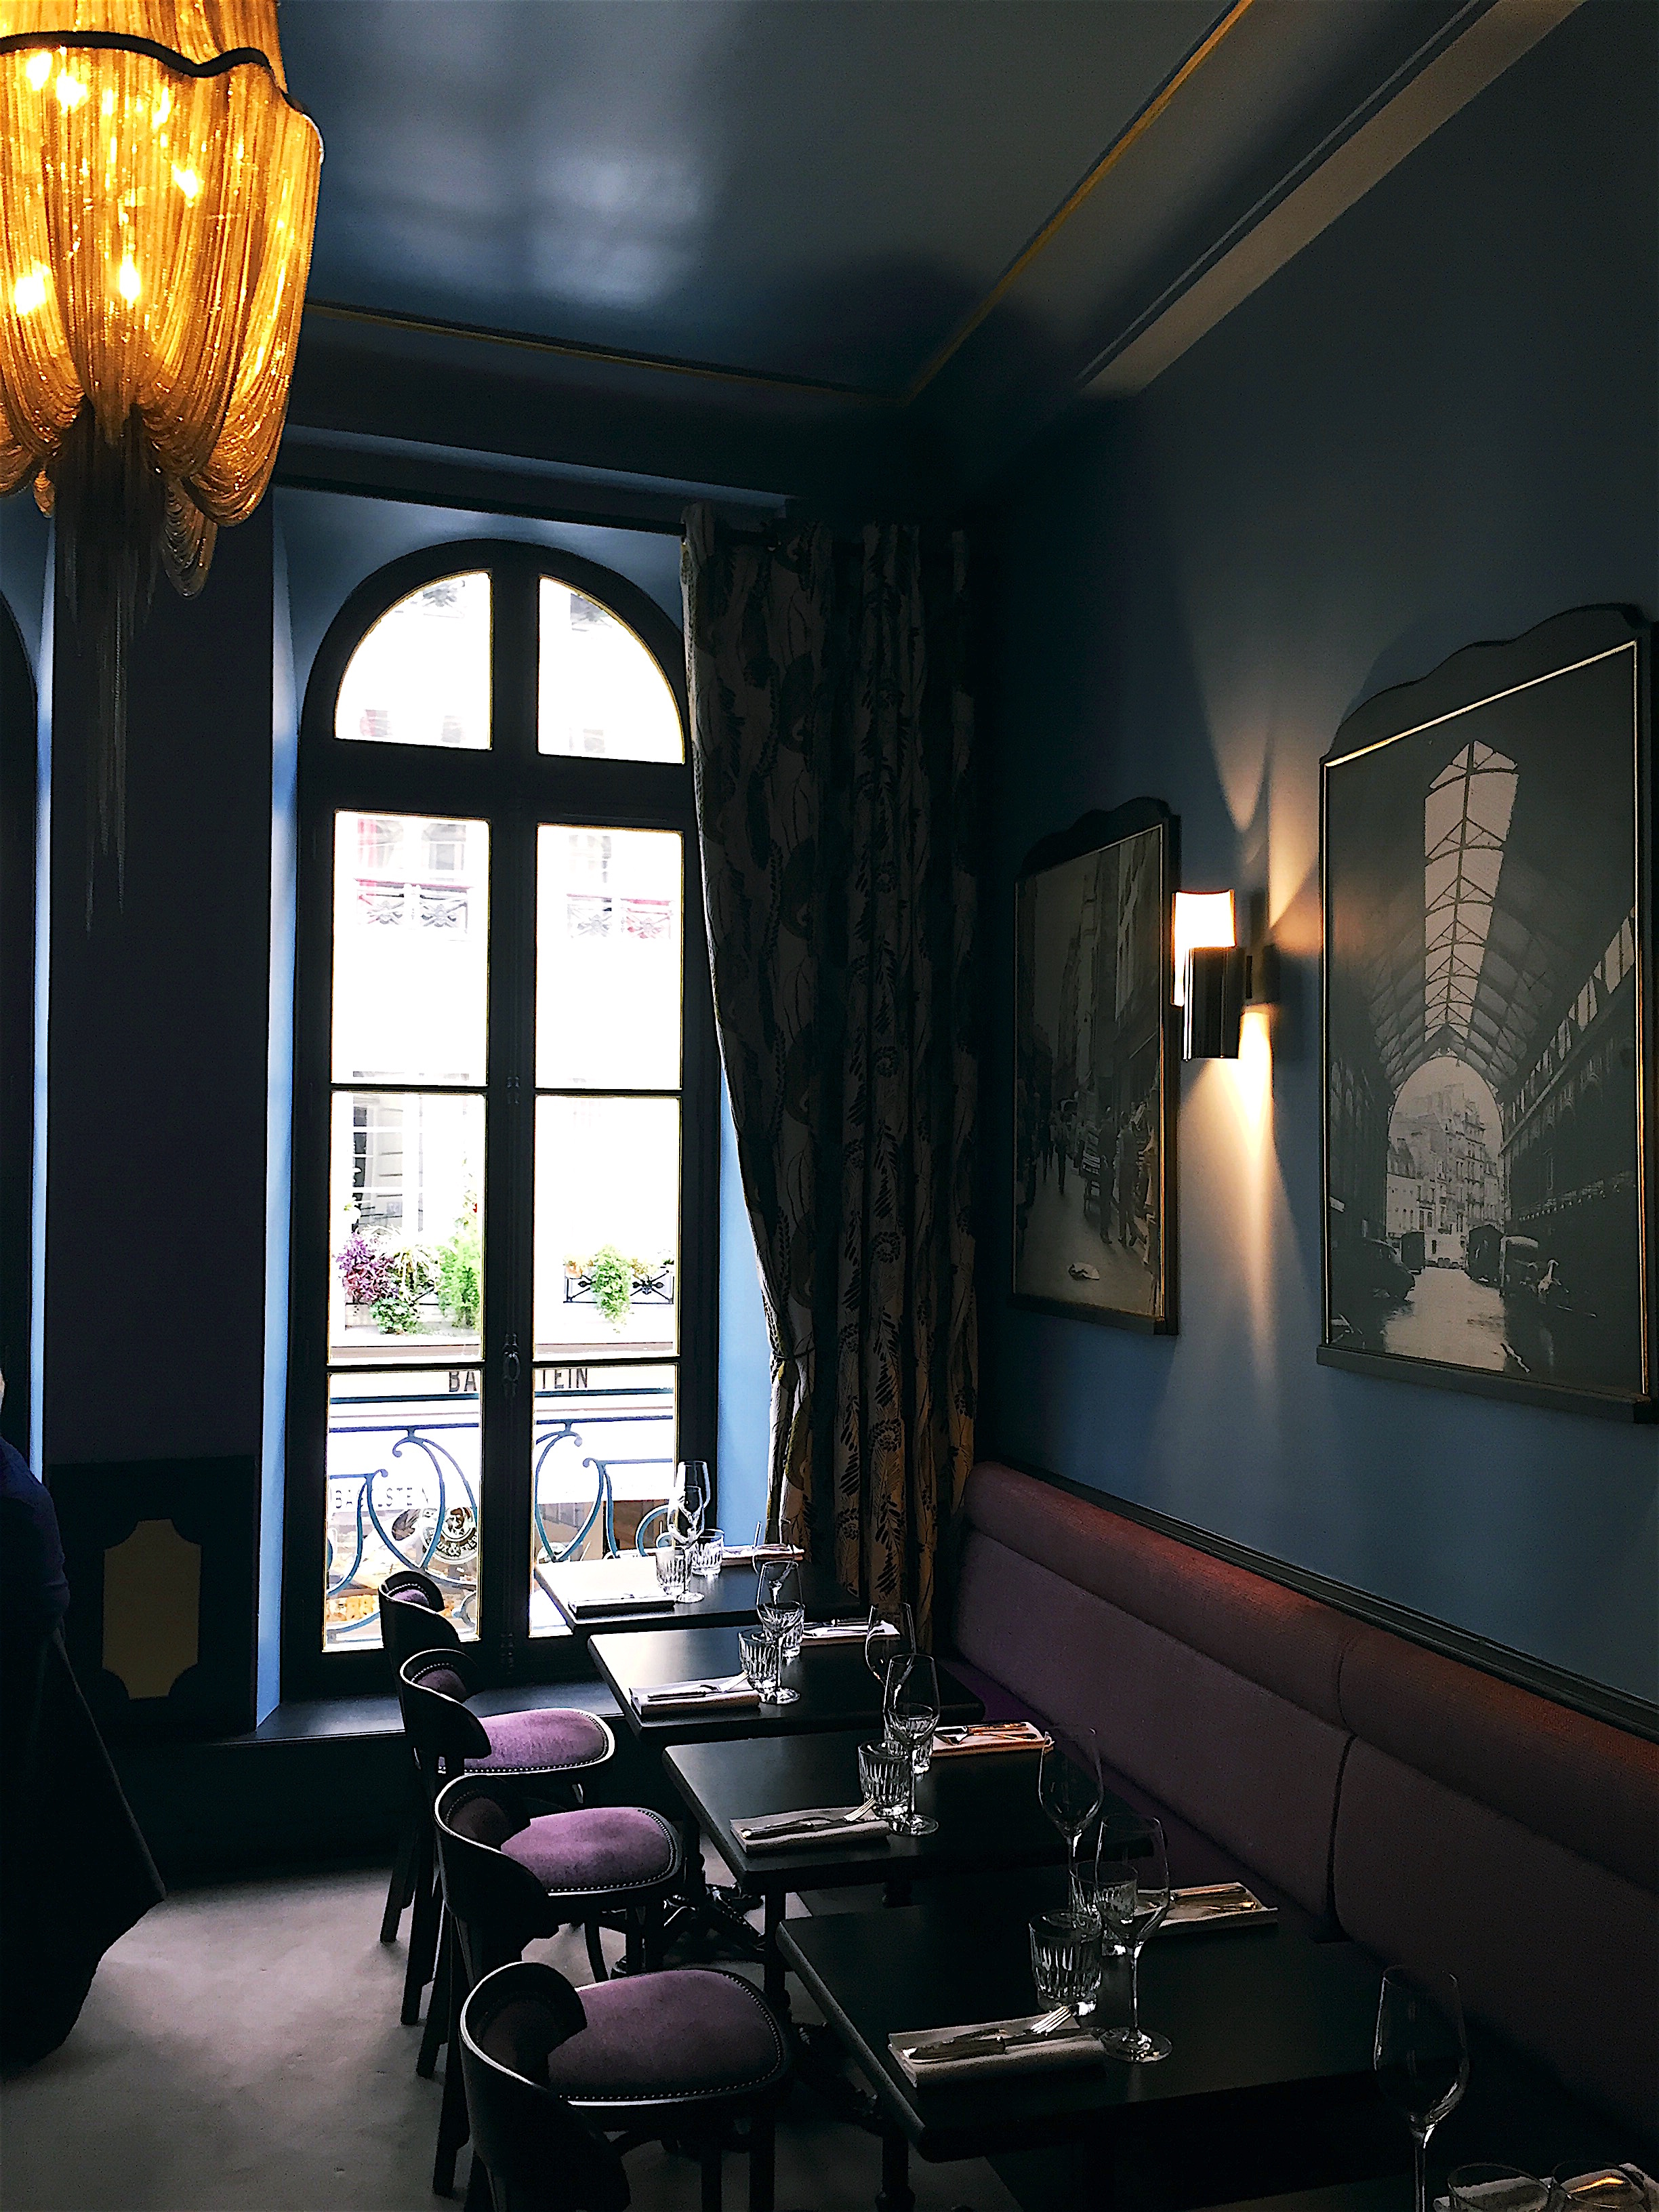 Romantic Restaurants in Paris for Date Night: Ralph's Café